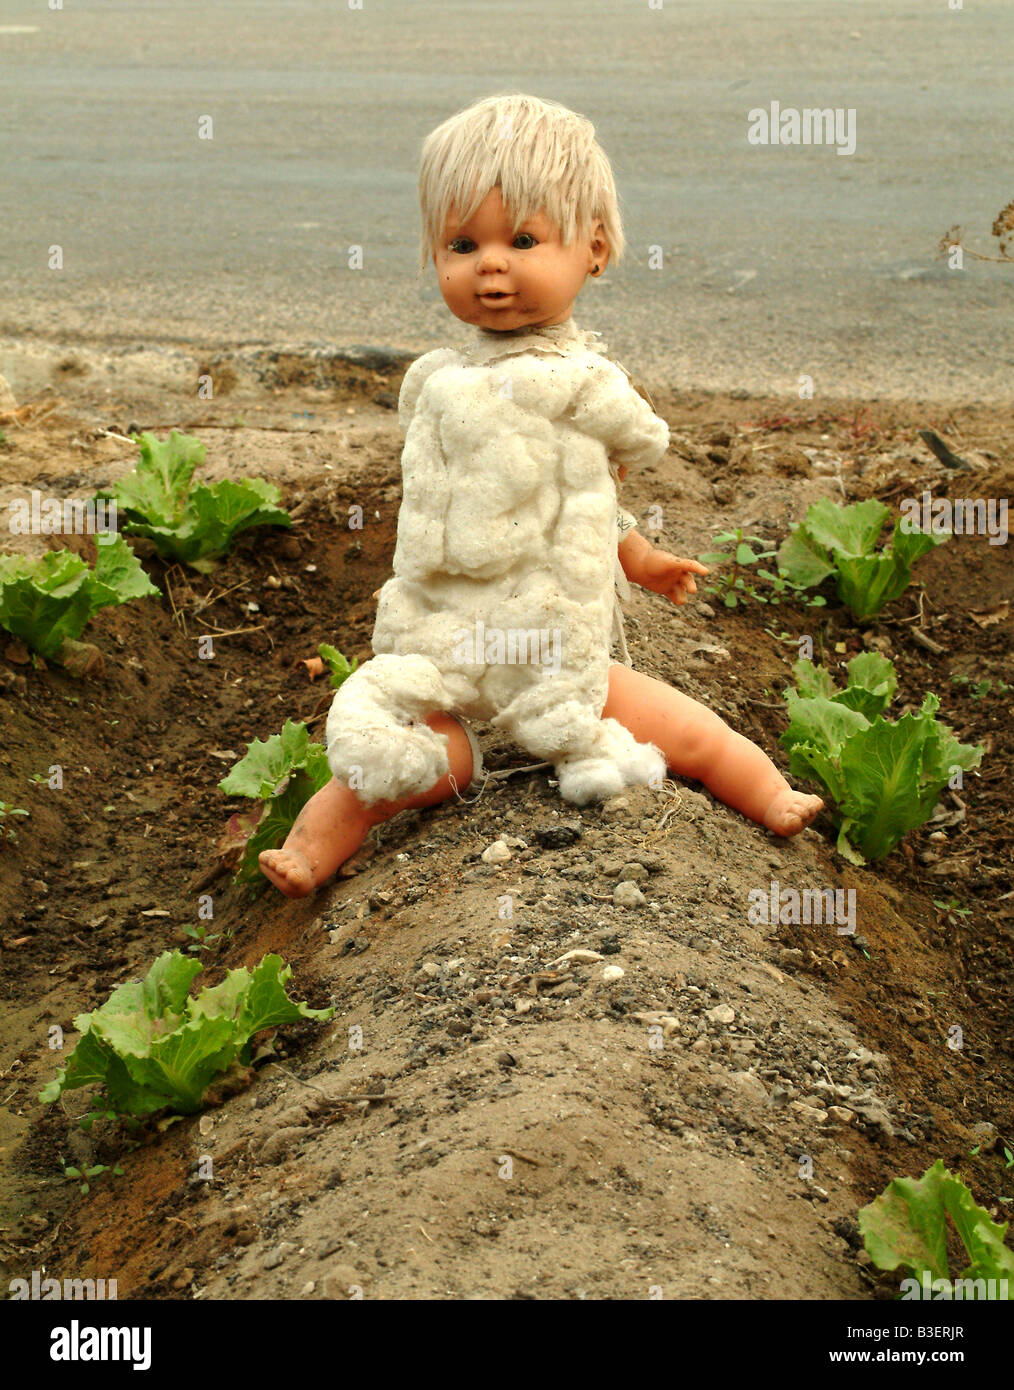 Un espantajo de la muñeca de un niño Foto de stock